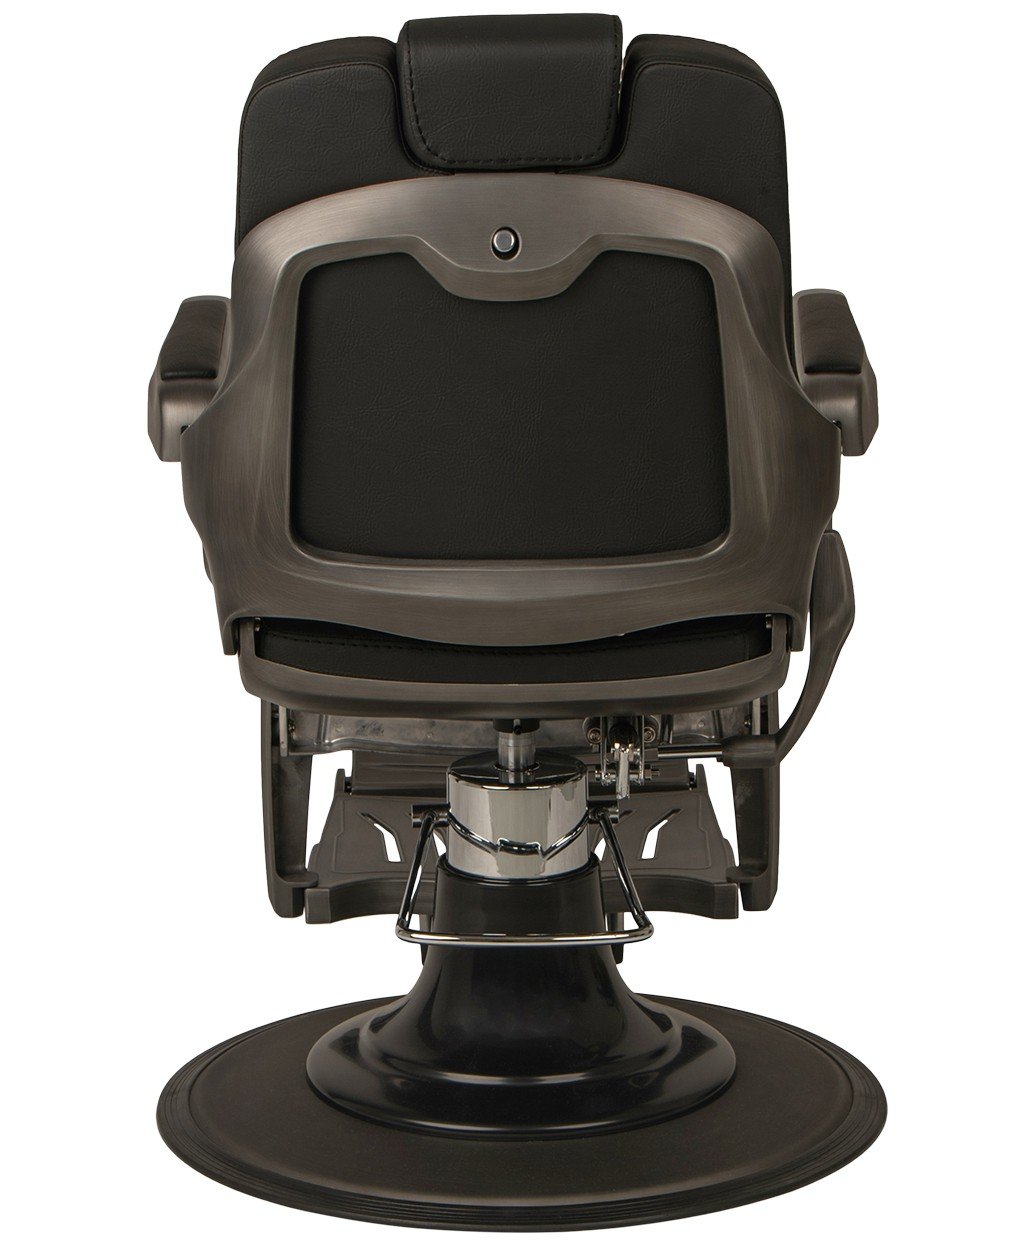 Futura Professional Barber Chair